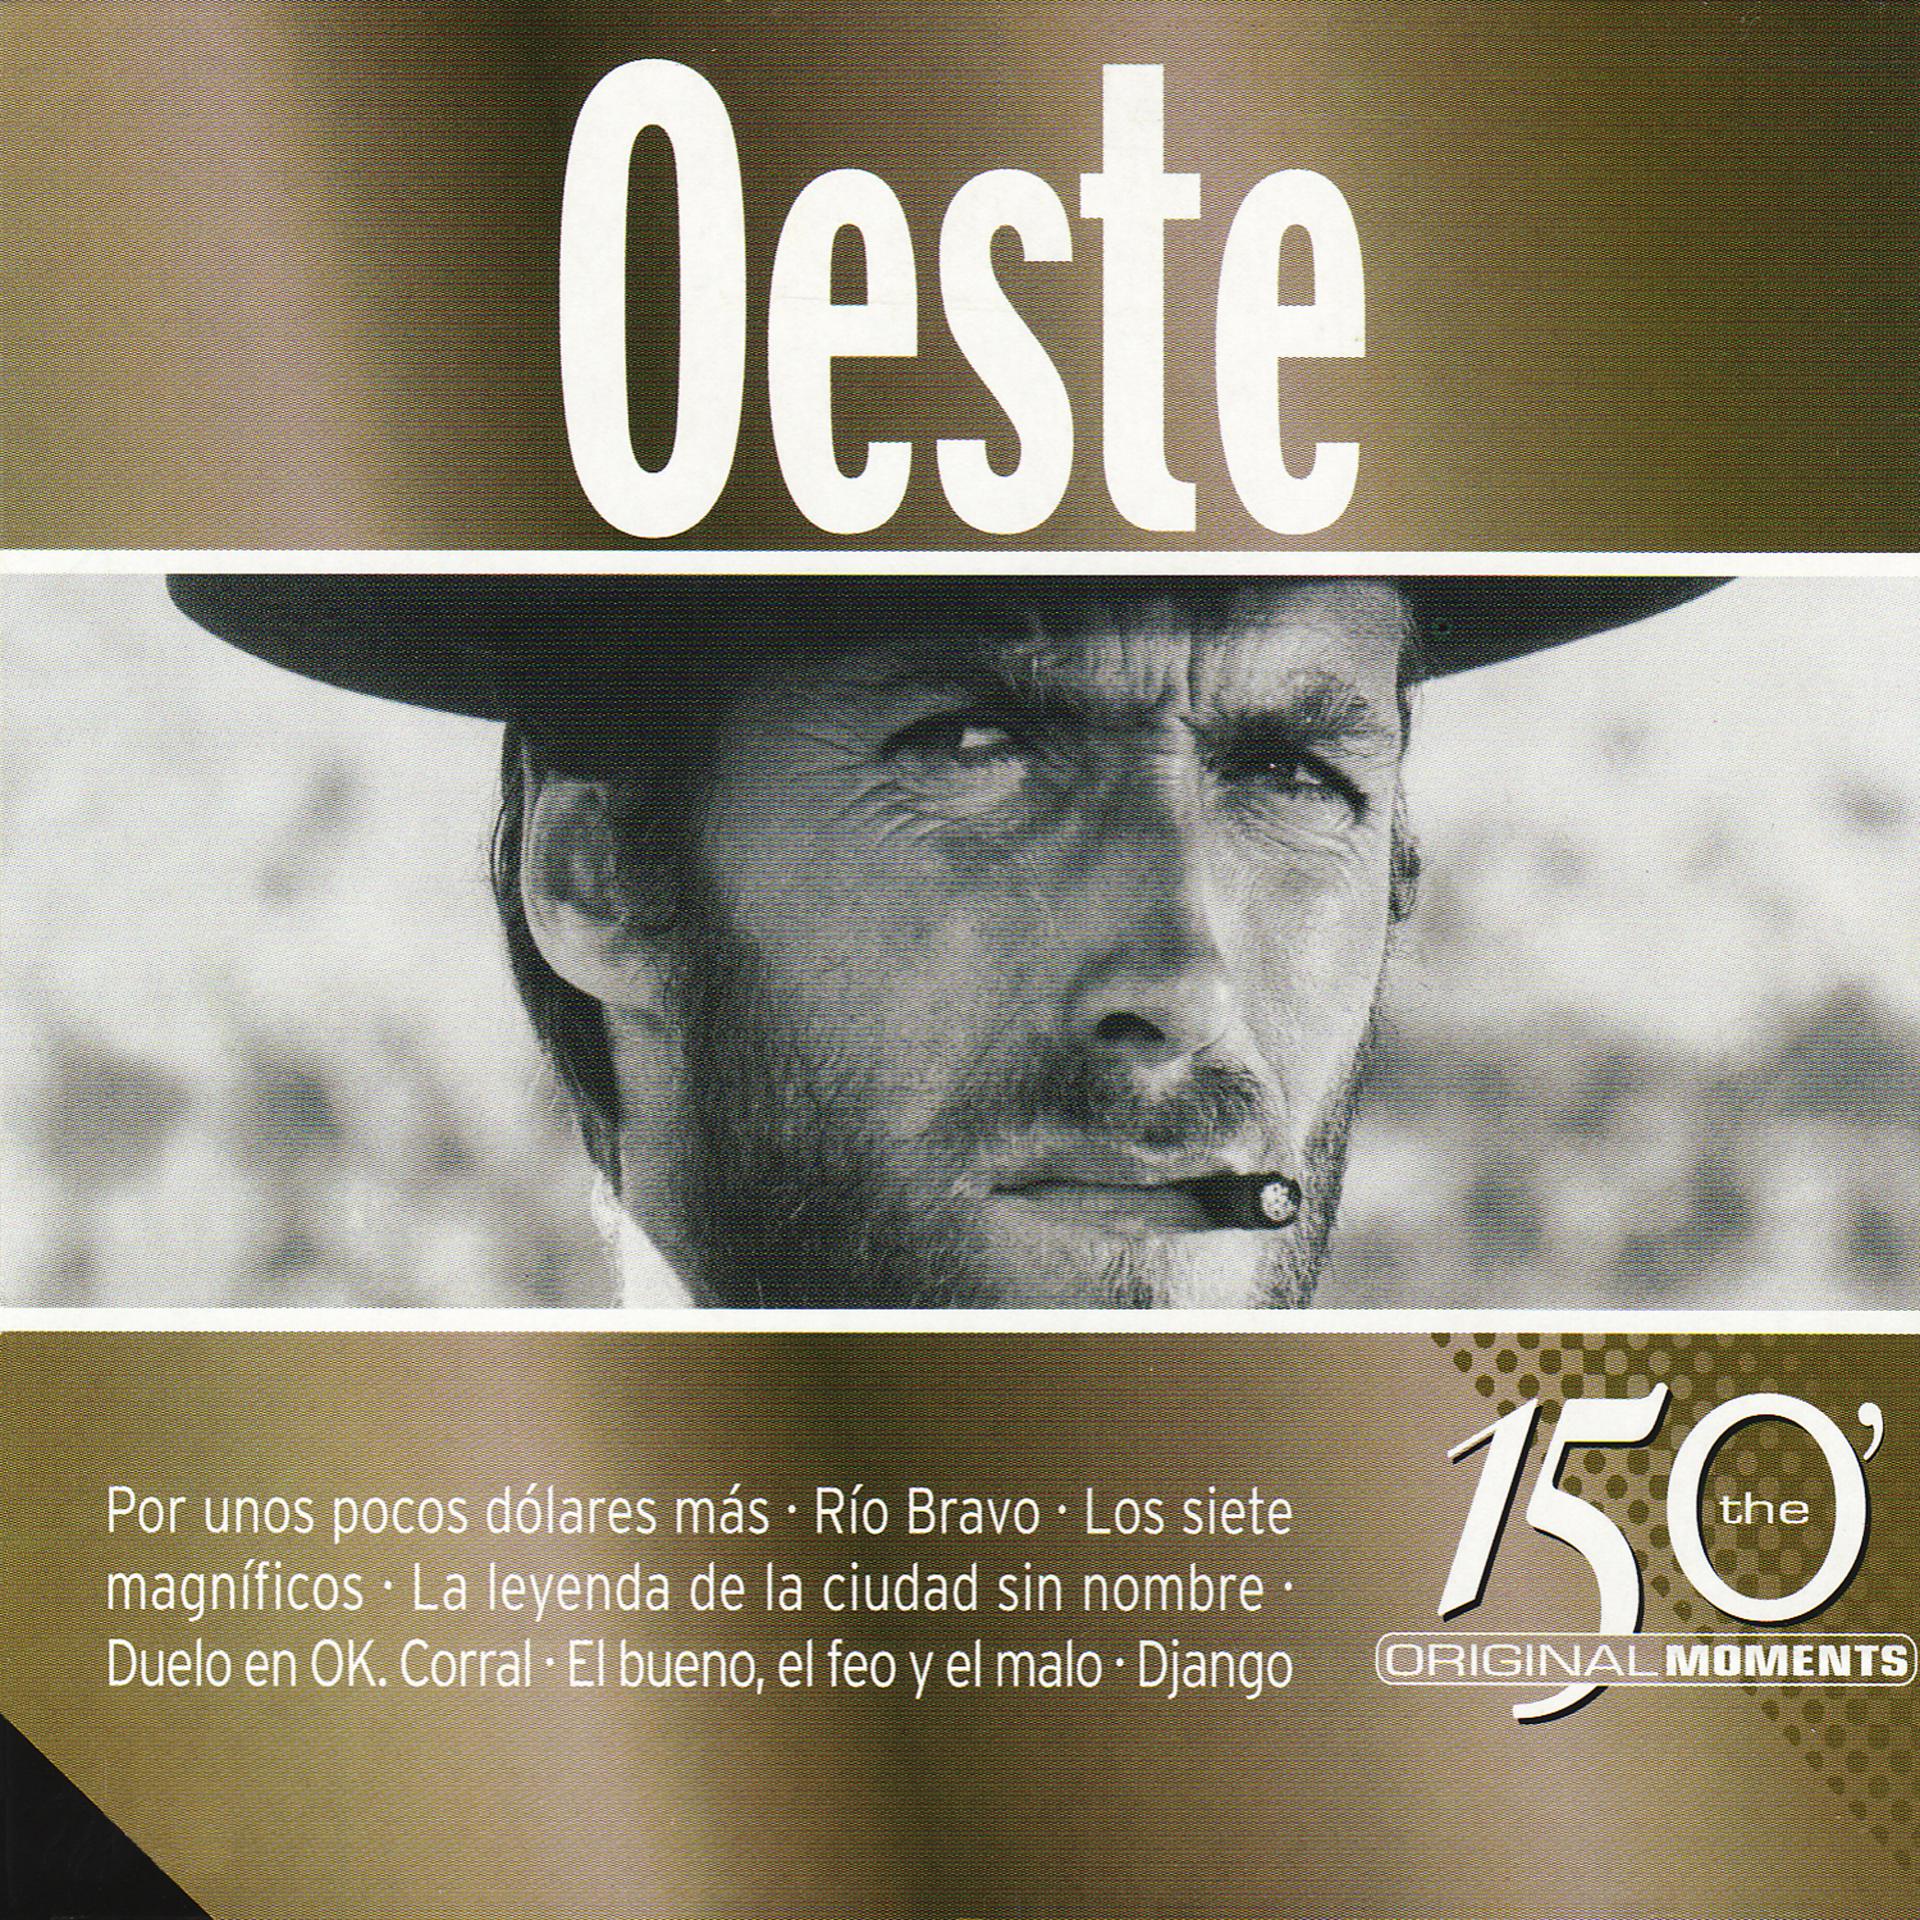 Постер альбома Música del Oeste